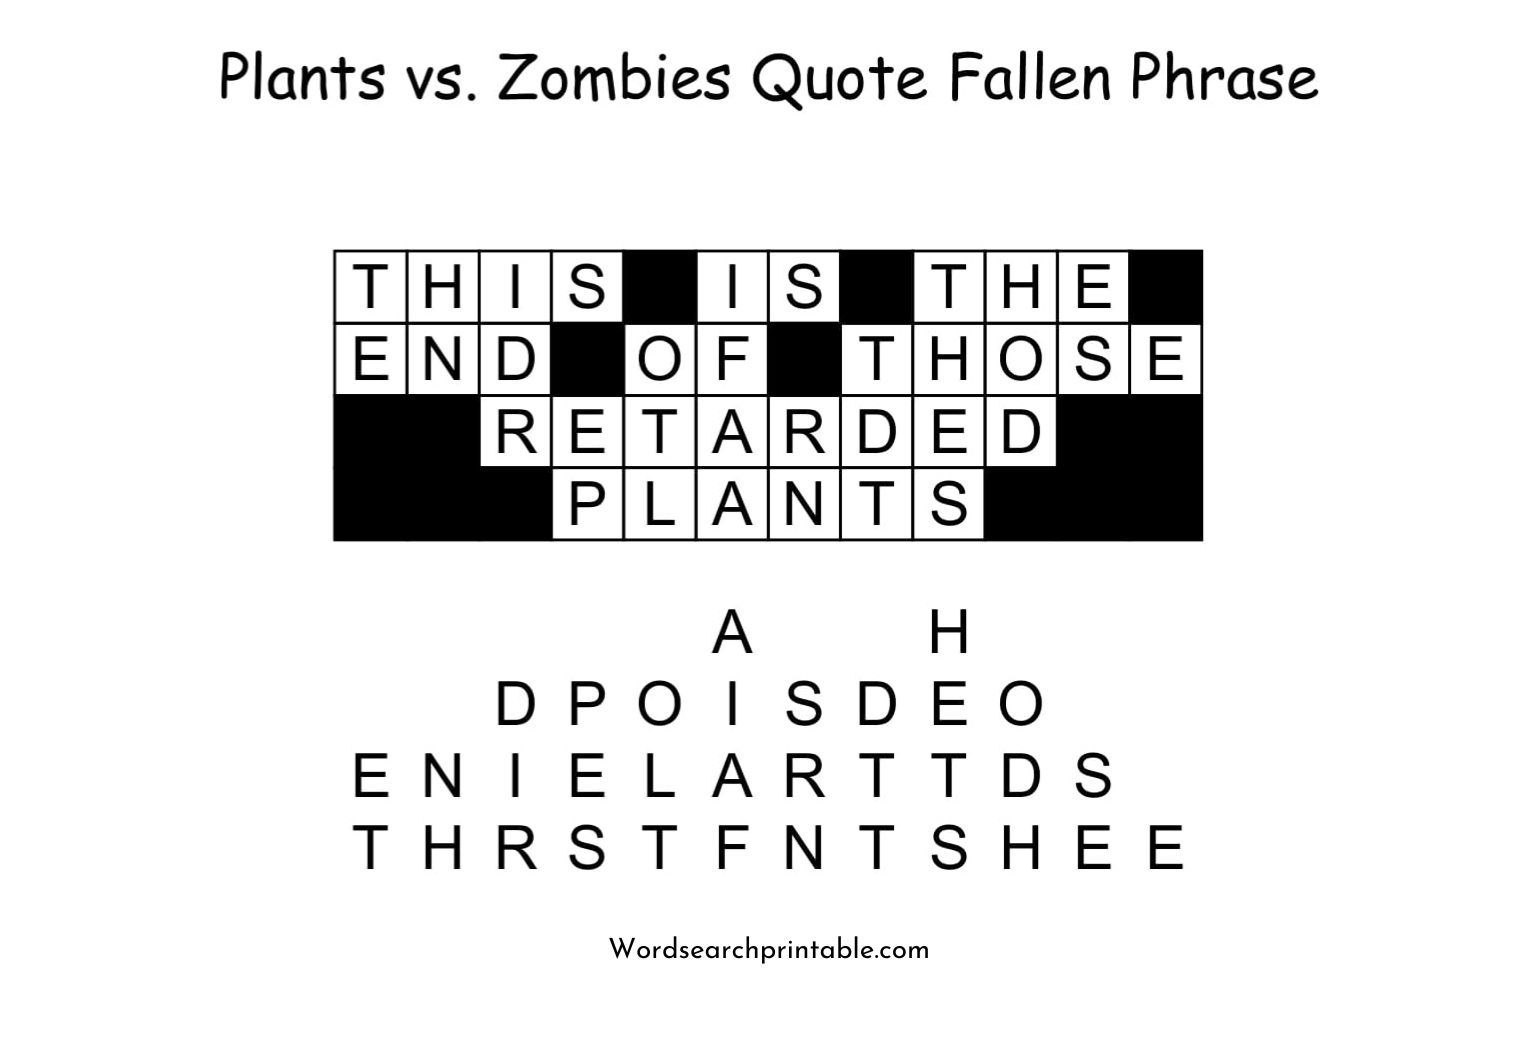 plants vs zombies quote fallen phrase puzzle solution